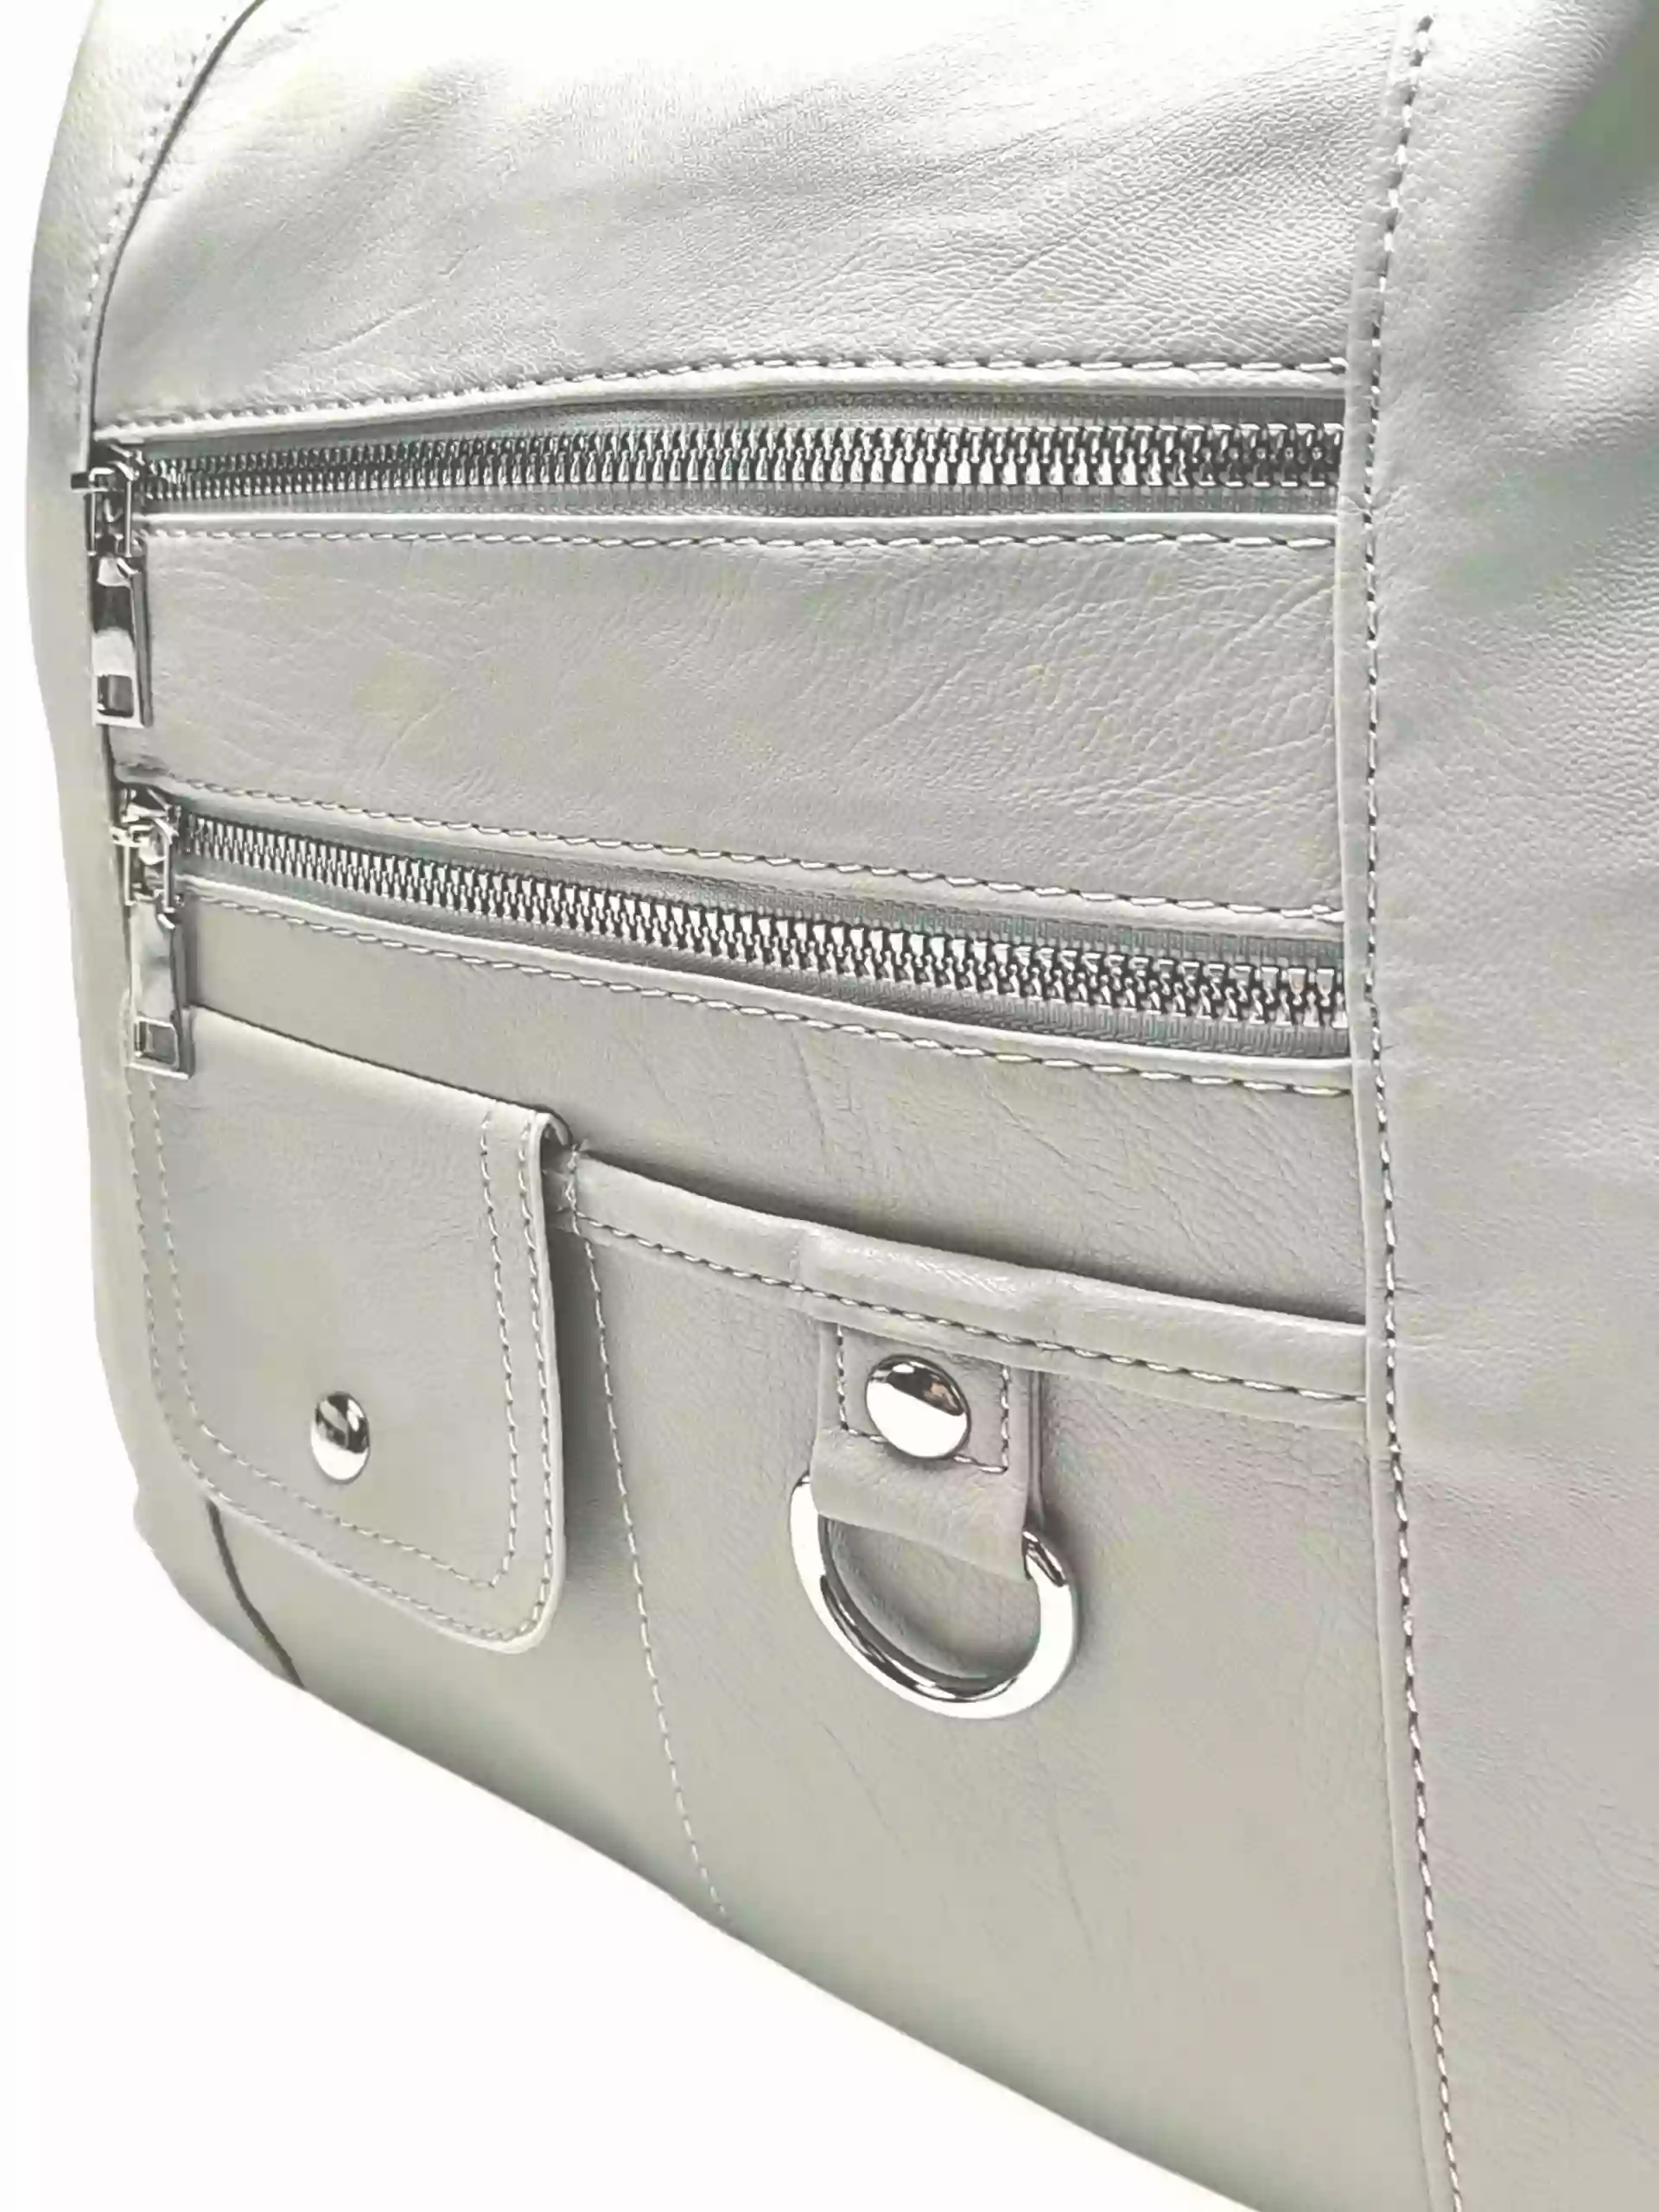 Šedobéžový kabelko-batoh 2v1 s kapsami, Tapple, S17BV6, detail kabelko-batohu 2v1